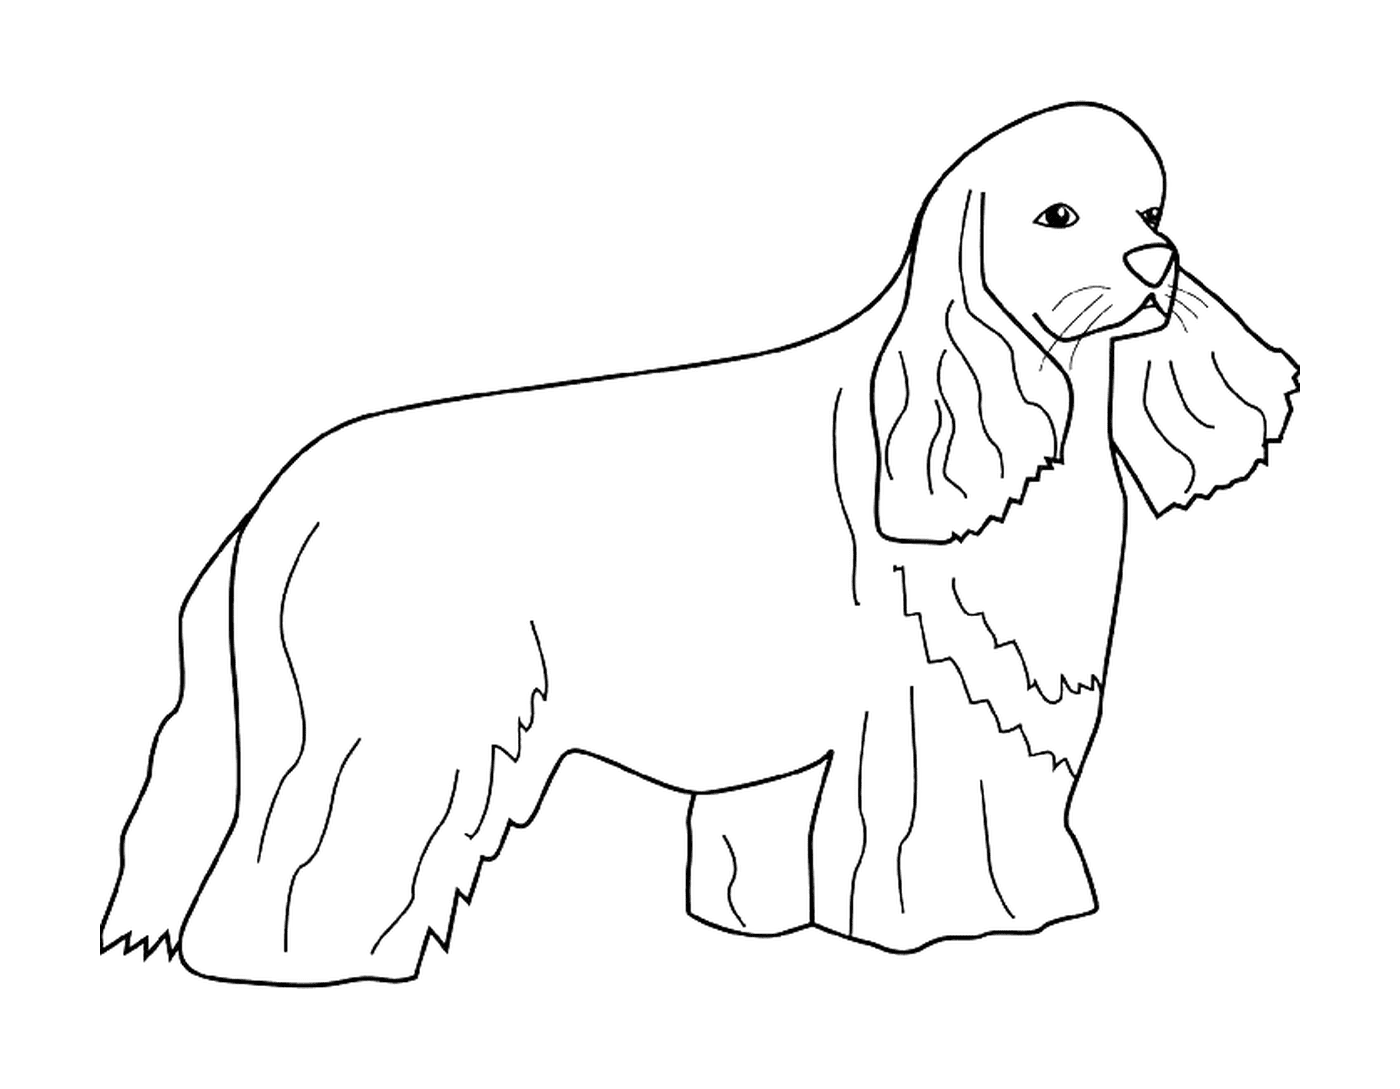  A cocker dog 